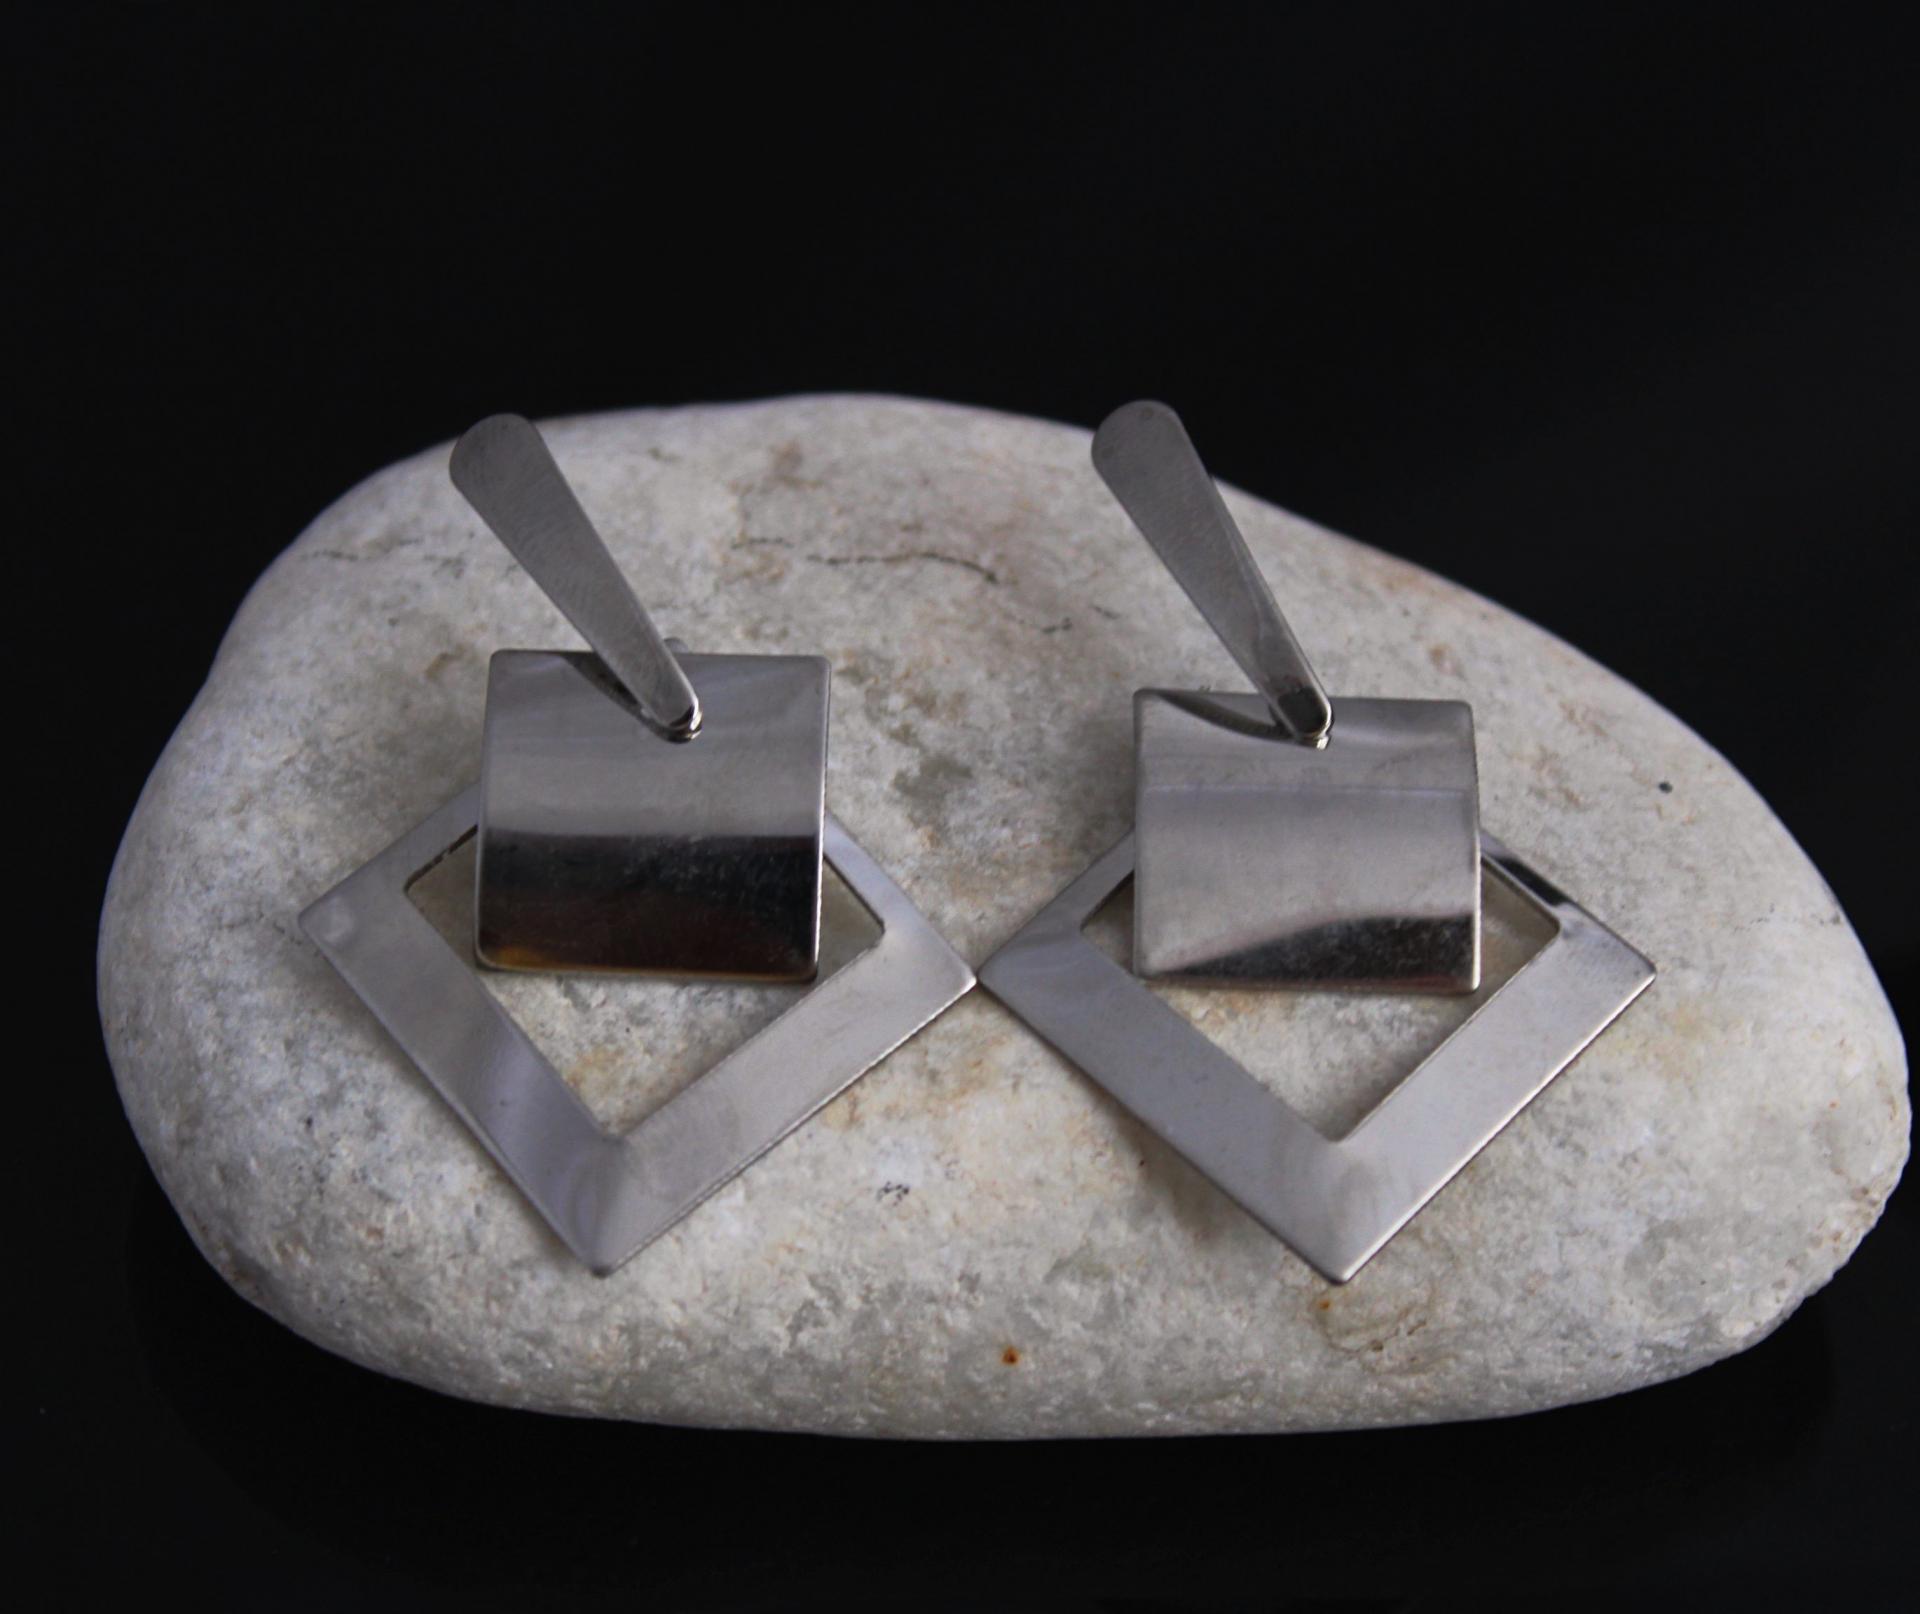 Stainless Steel Geometric Square Earrings